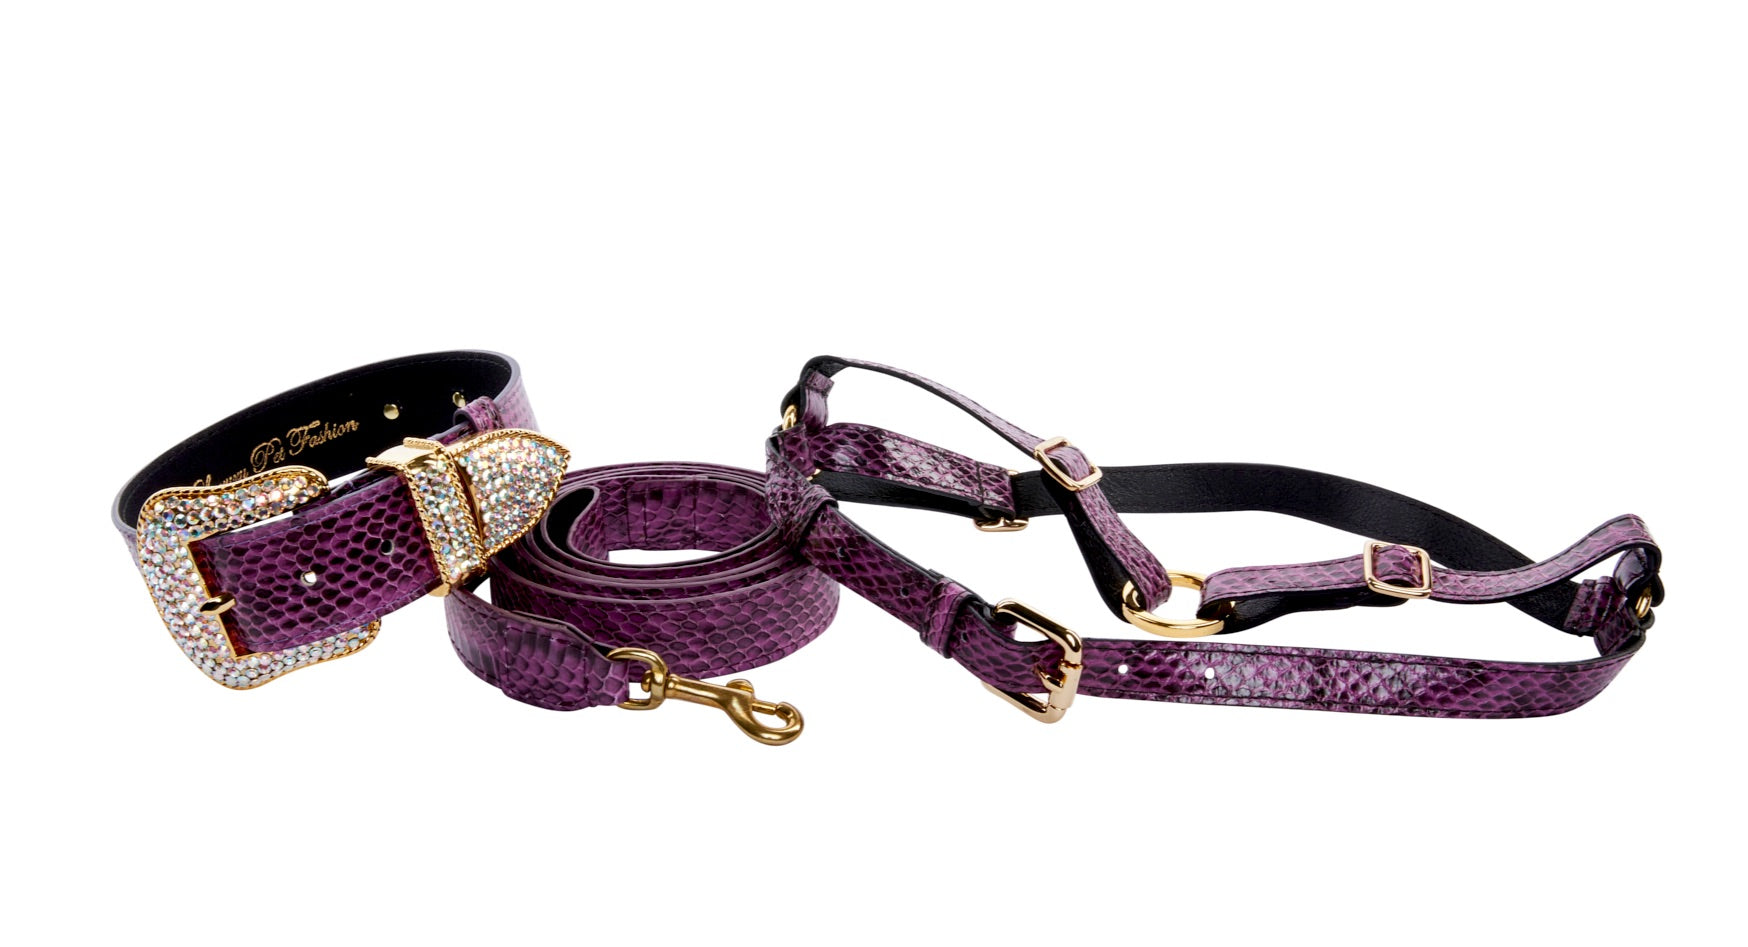 Denim and Lace Swarovski Studded Luxury Dog Harness